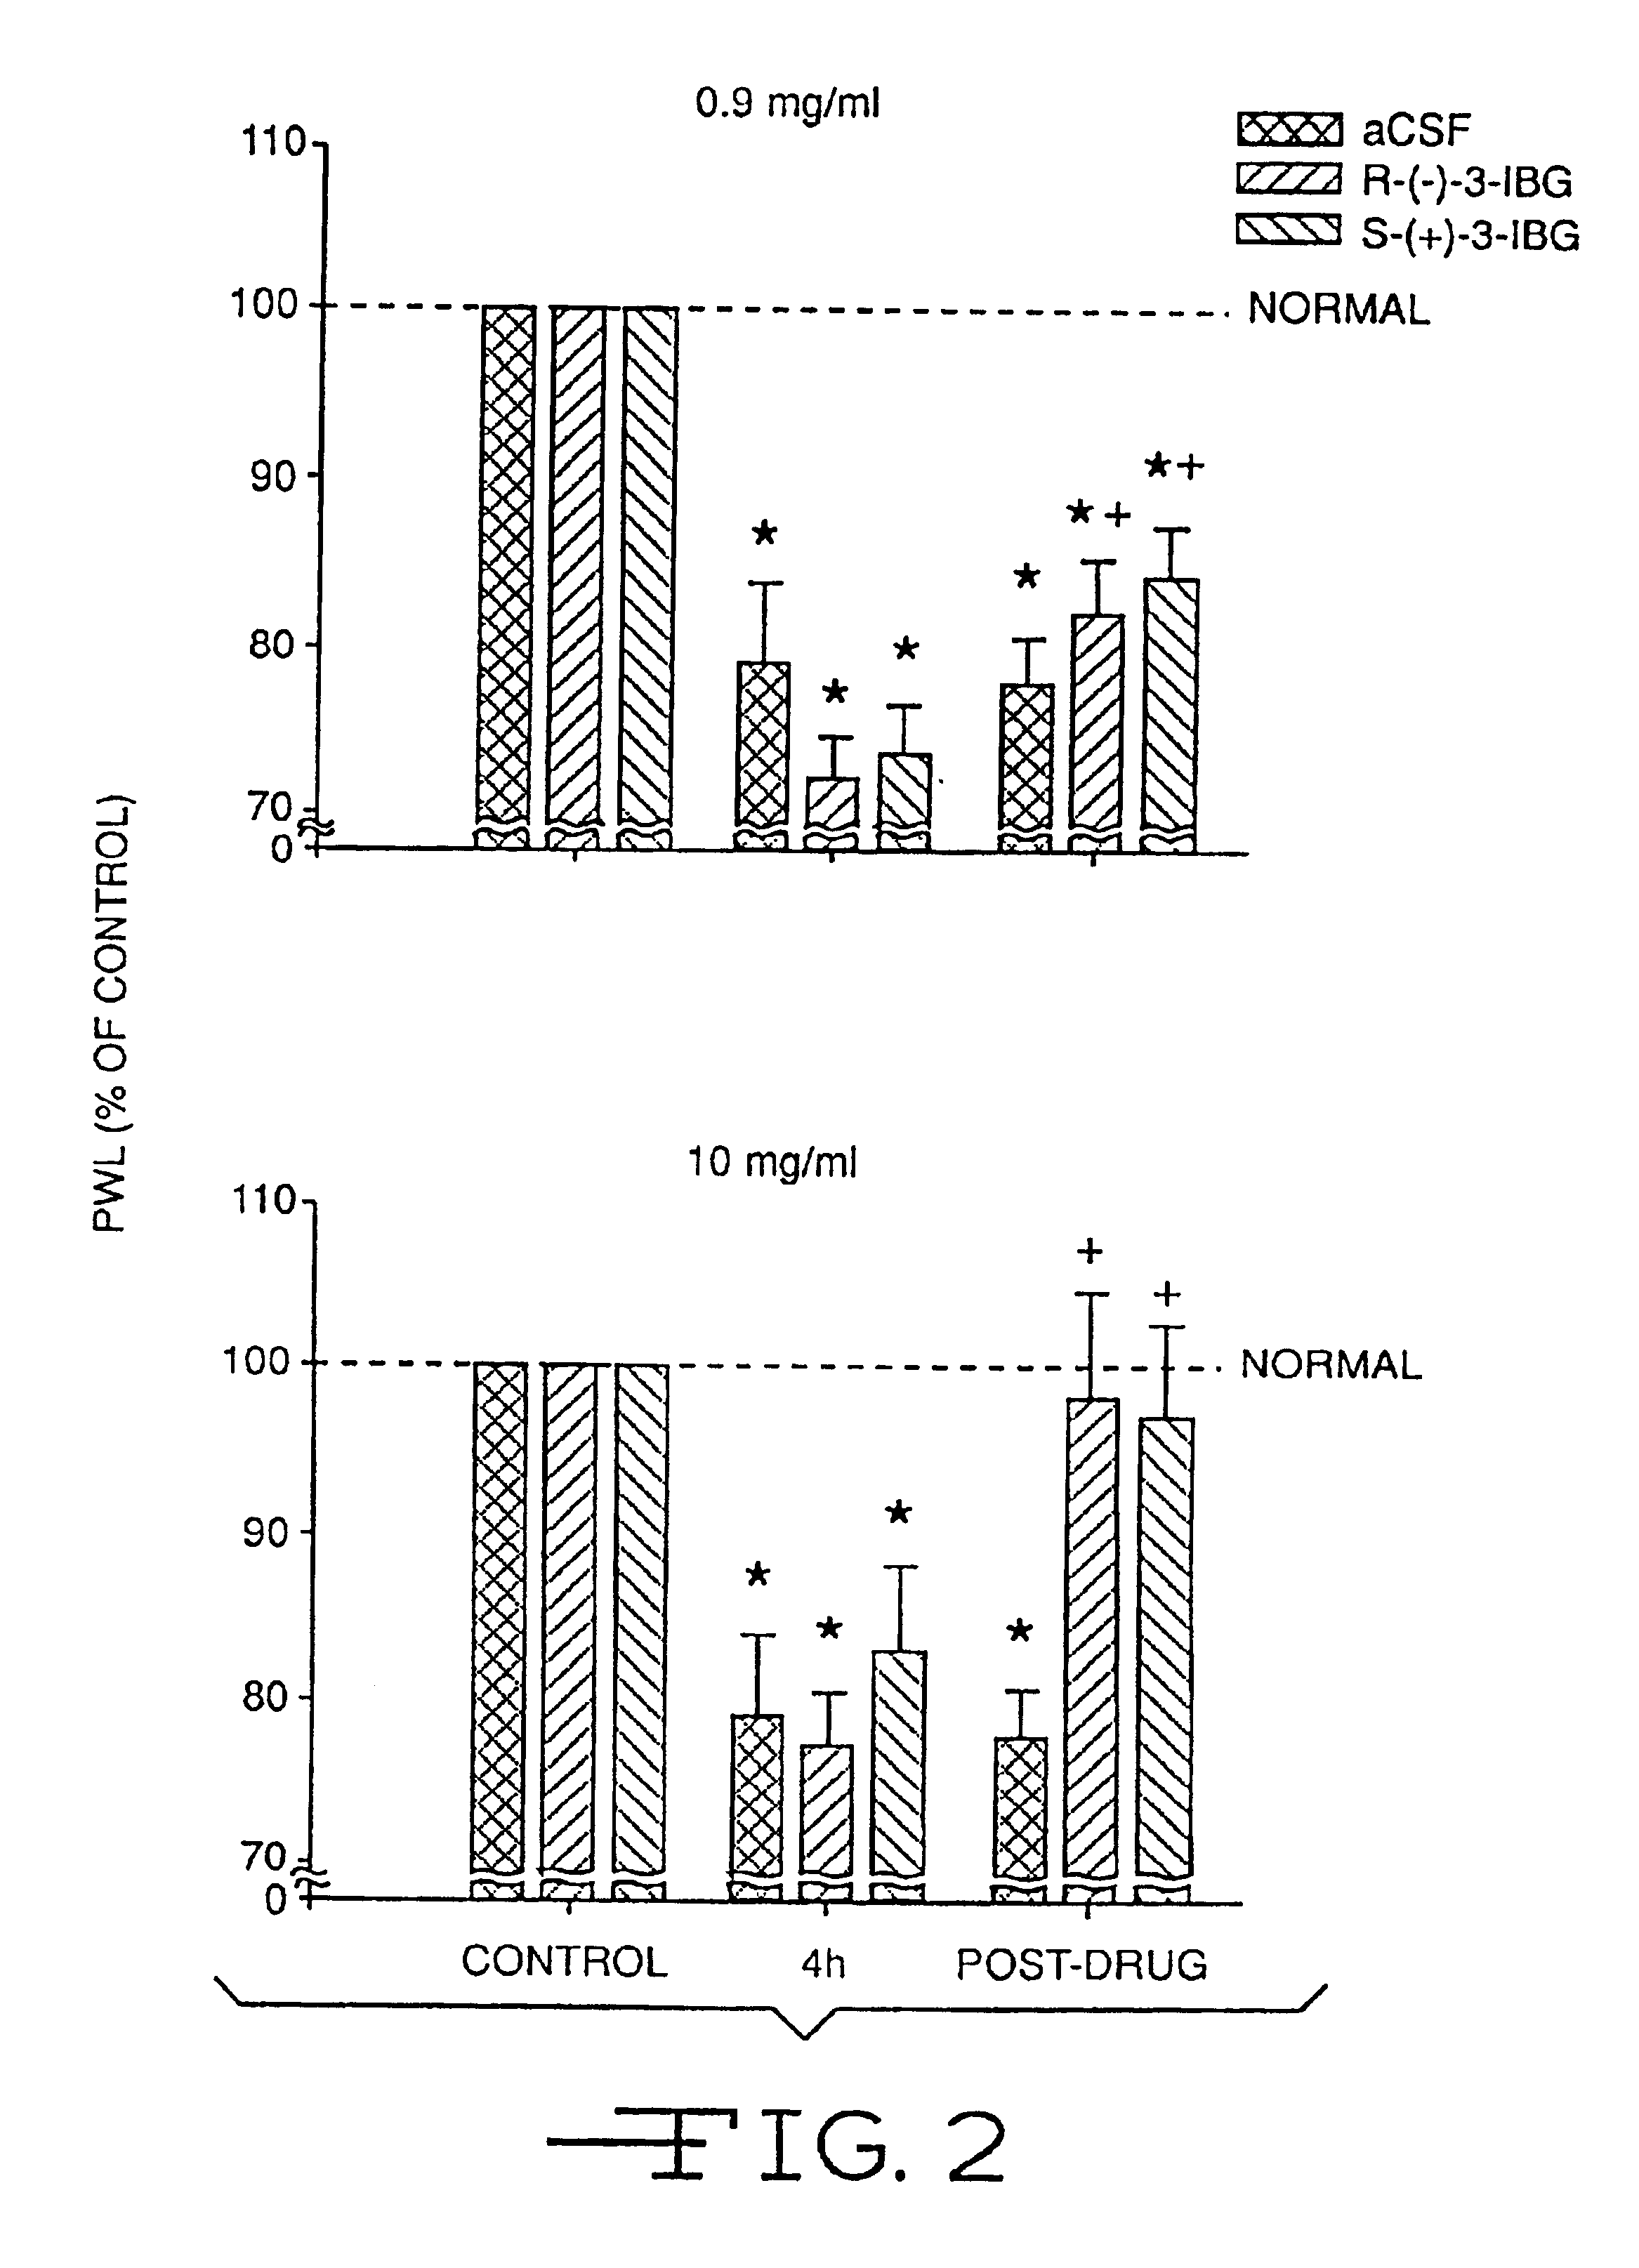 Anti-inflammatory method using gamma-aminobutyric acid (GABA) analogs